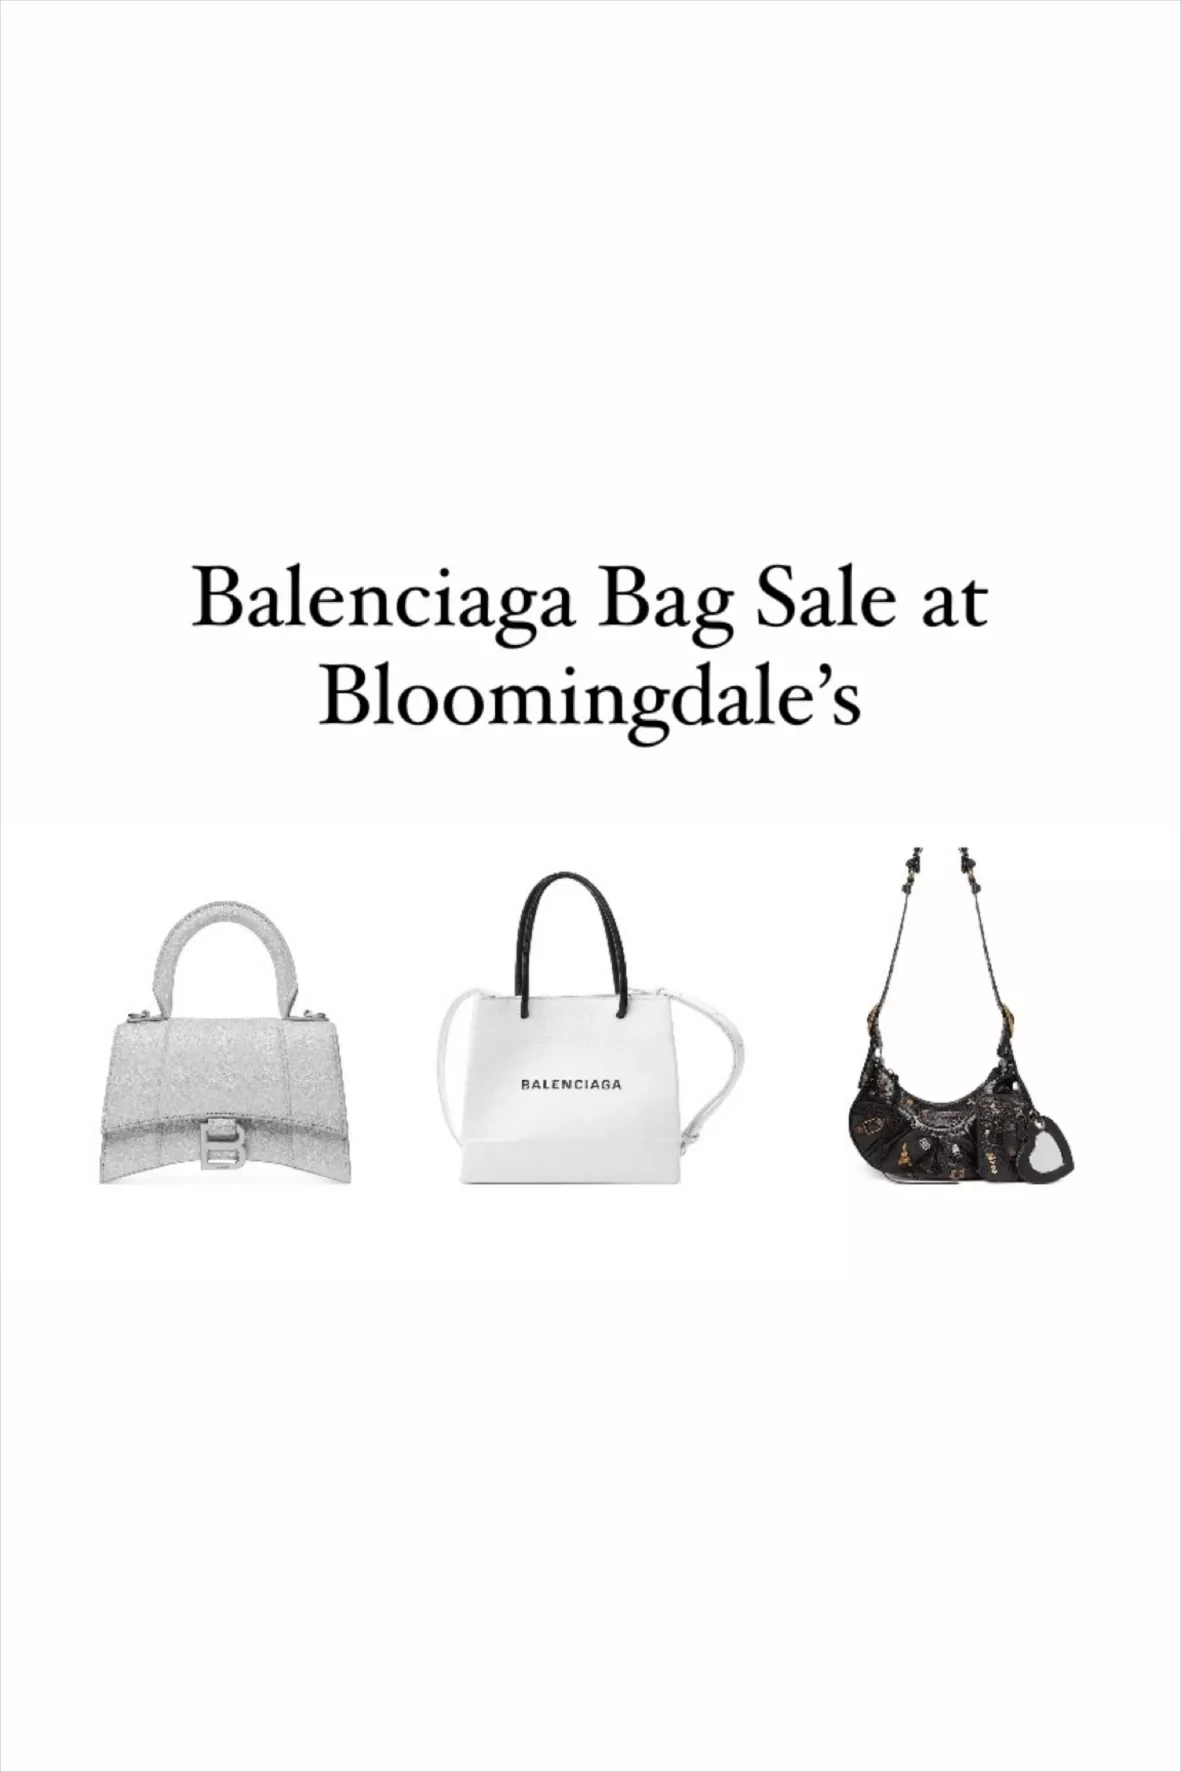 Balenciaga on Sale - Bloomingdale's